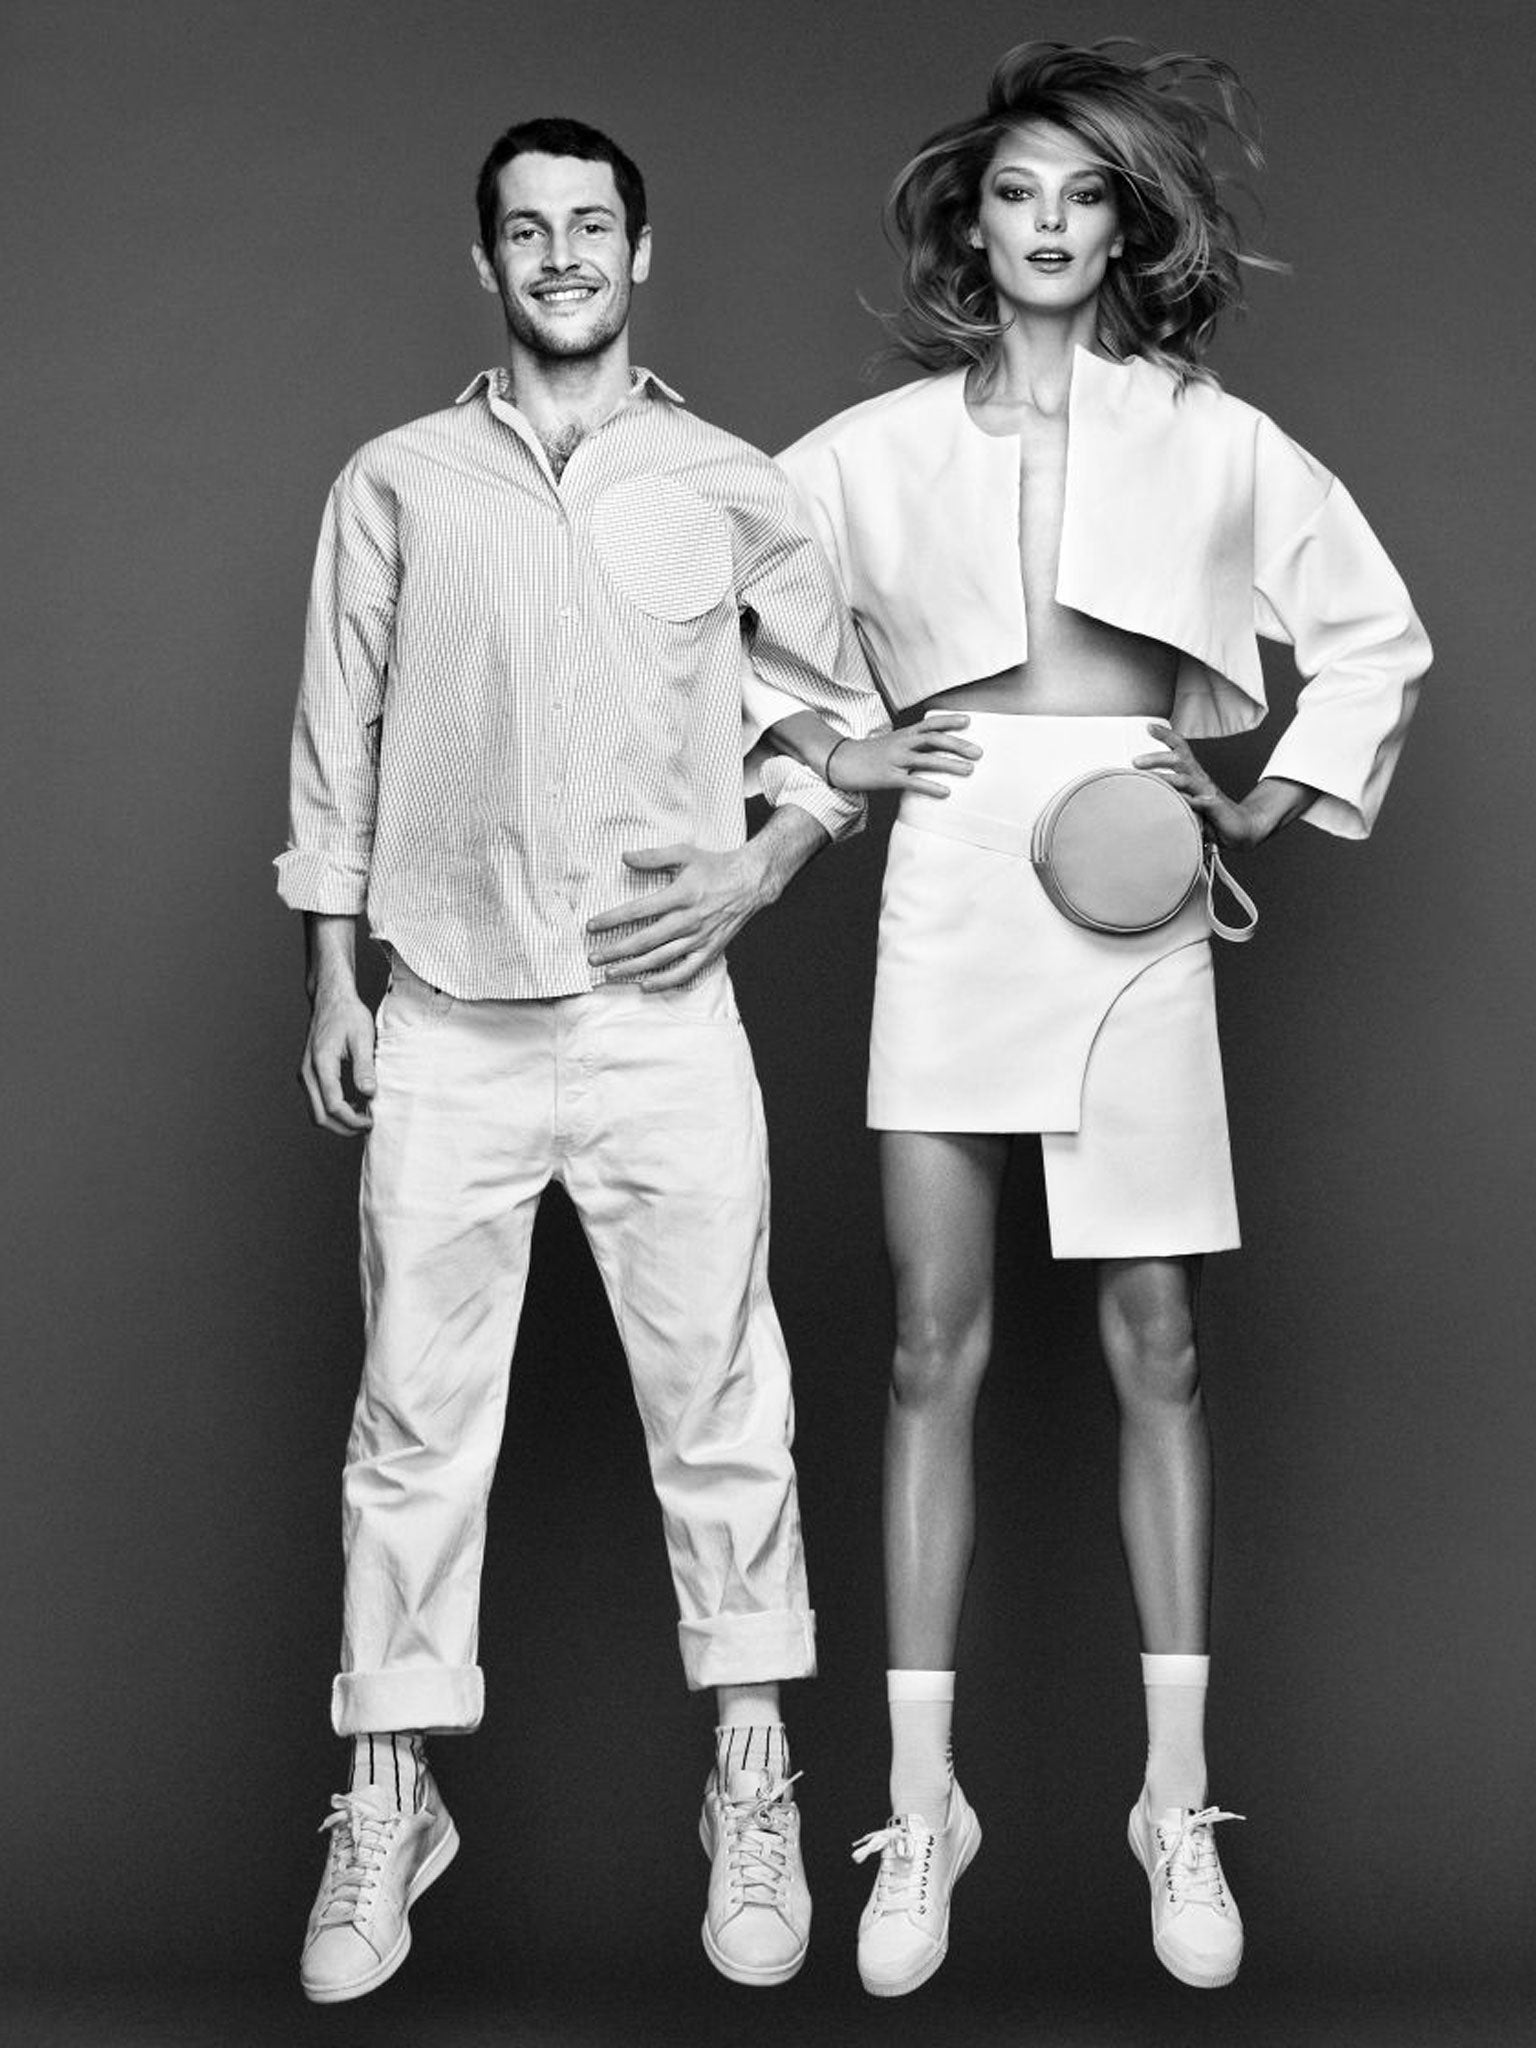 Jump for joy: Daria Werbowy, face of Lancôme, poses with Simon Porte Jacquemus